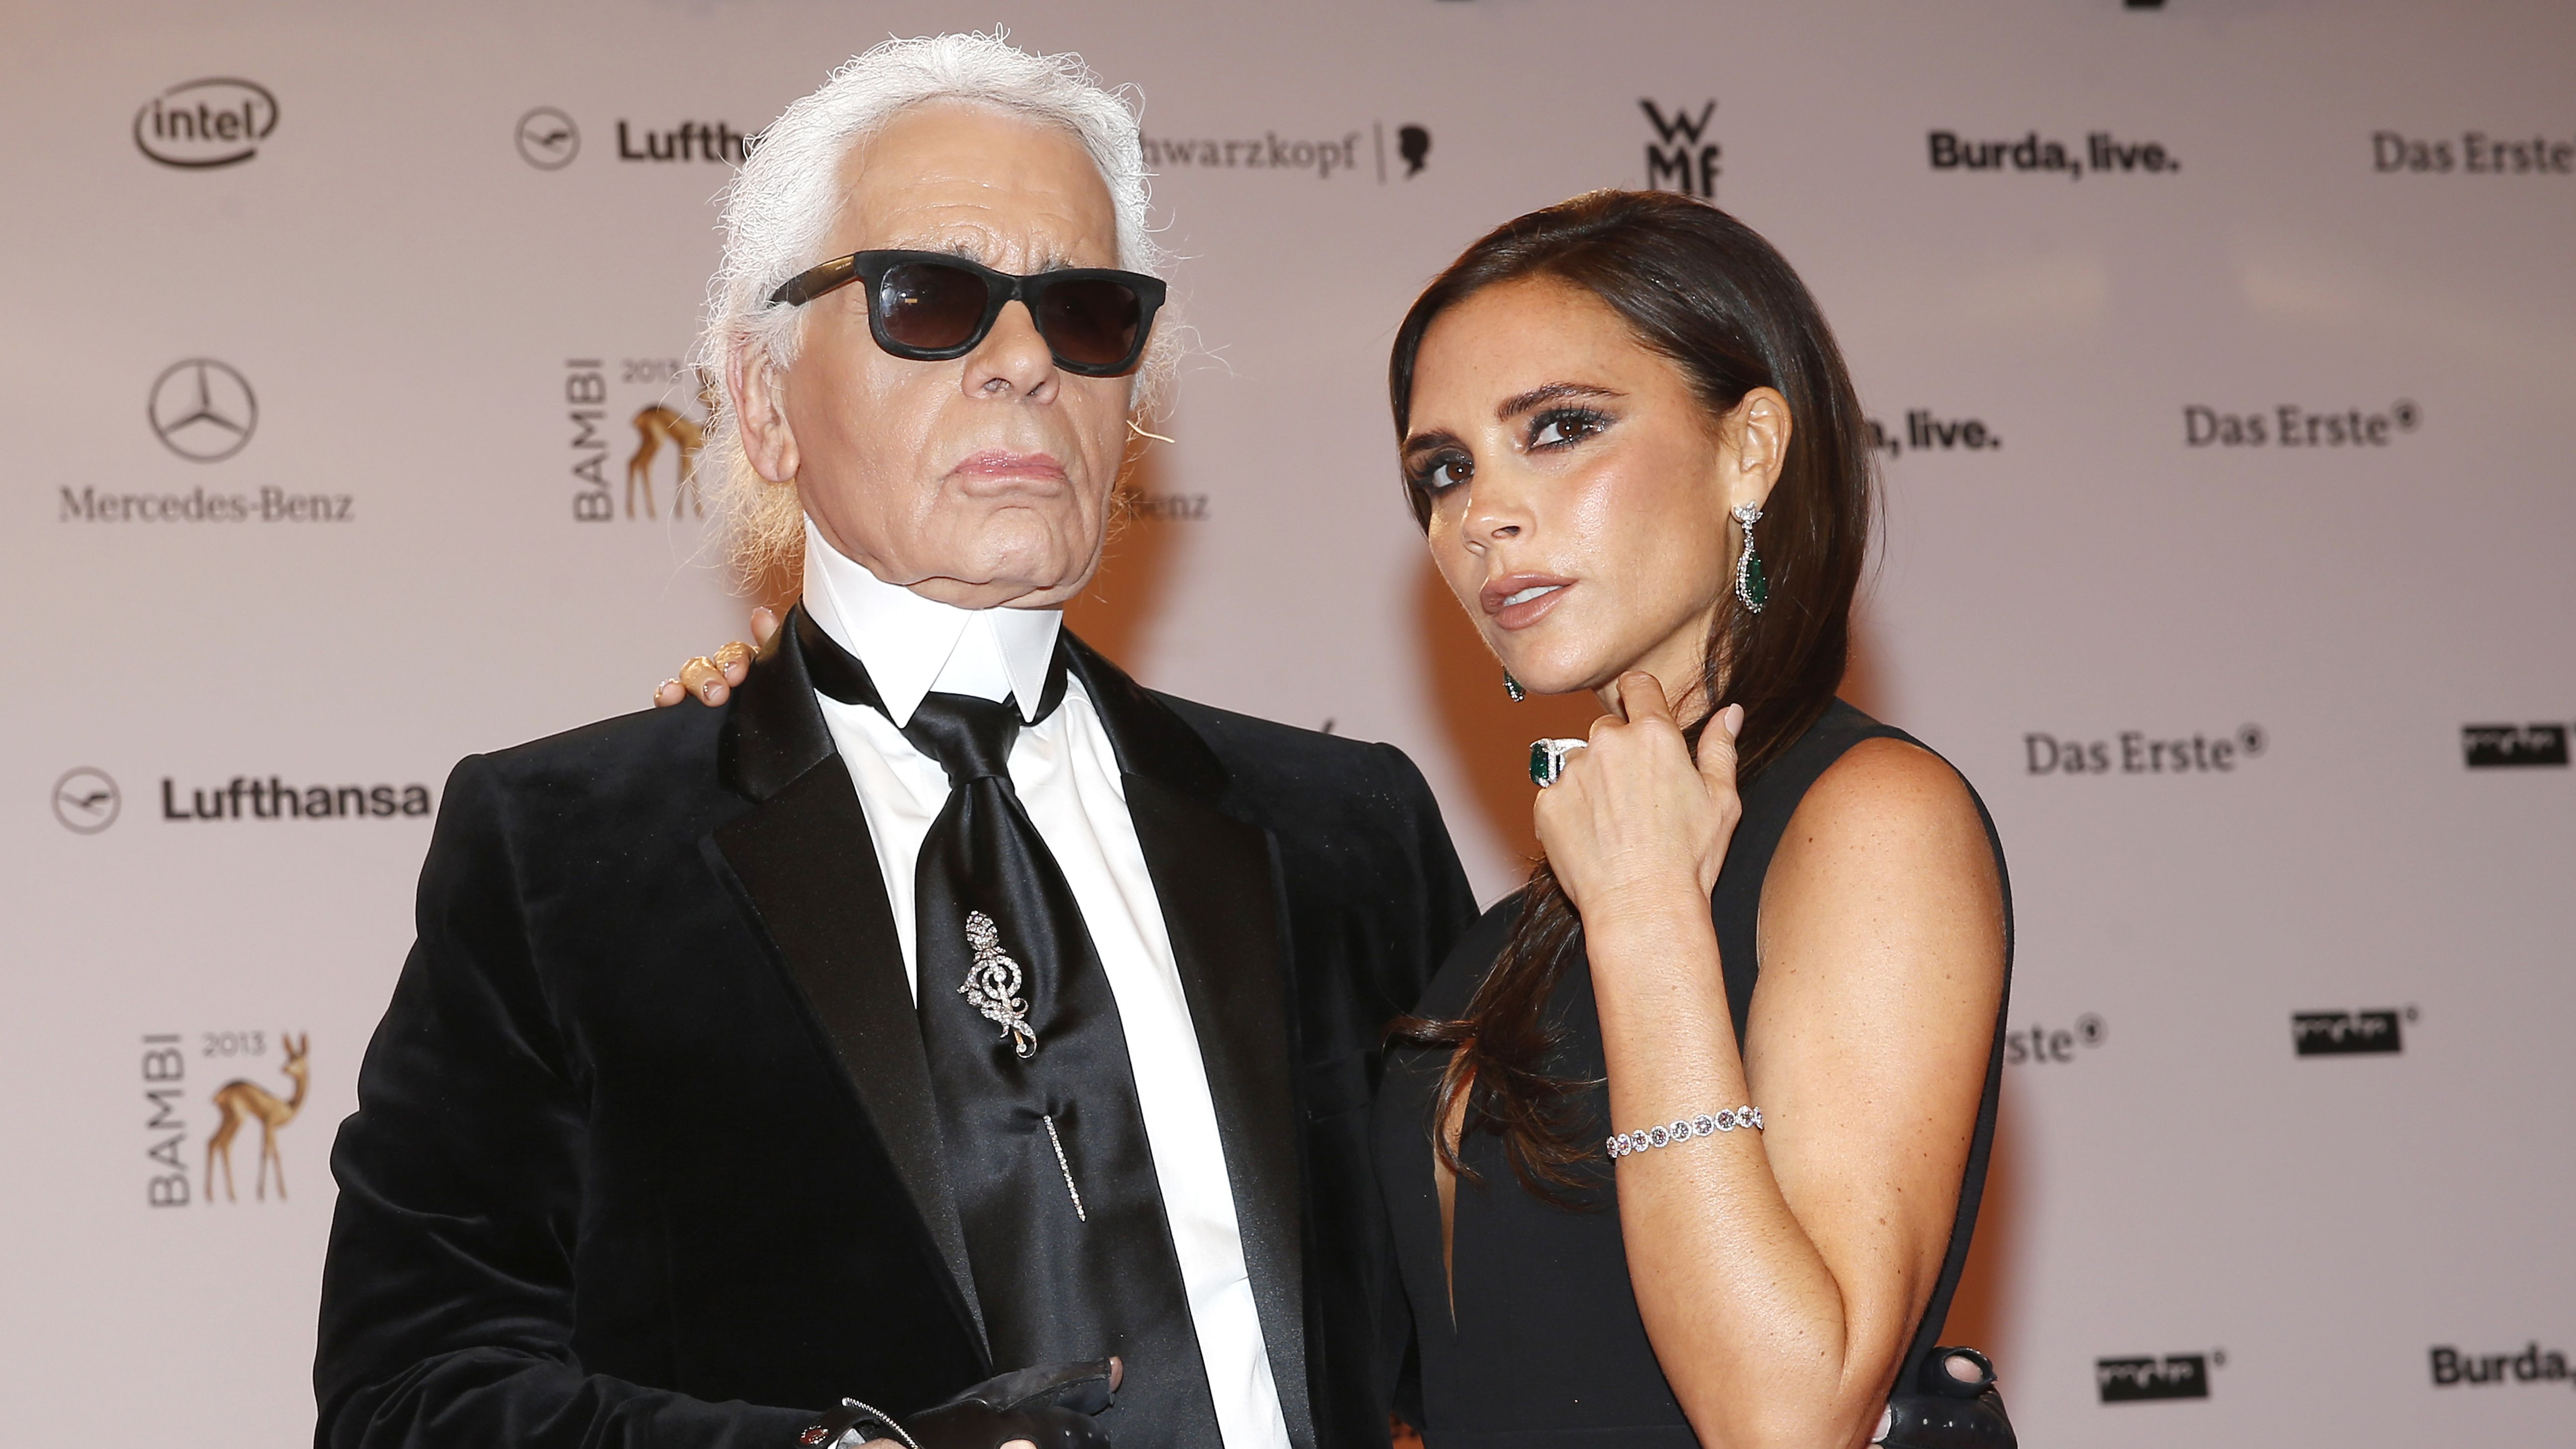 Karl Lagerfeld dead: Fashion legend Karl Lagerfeld has died aged 85